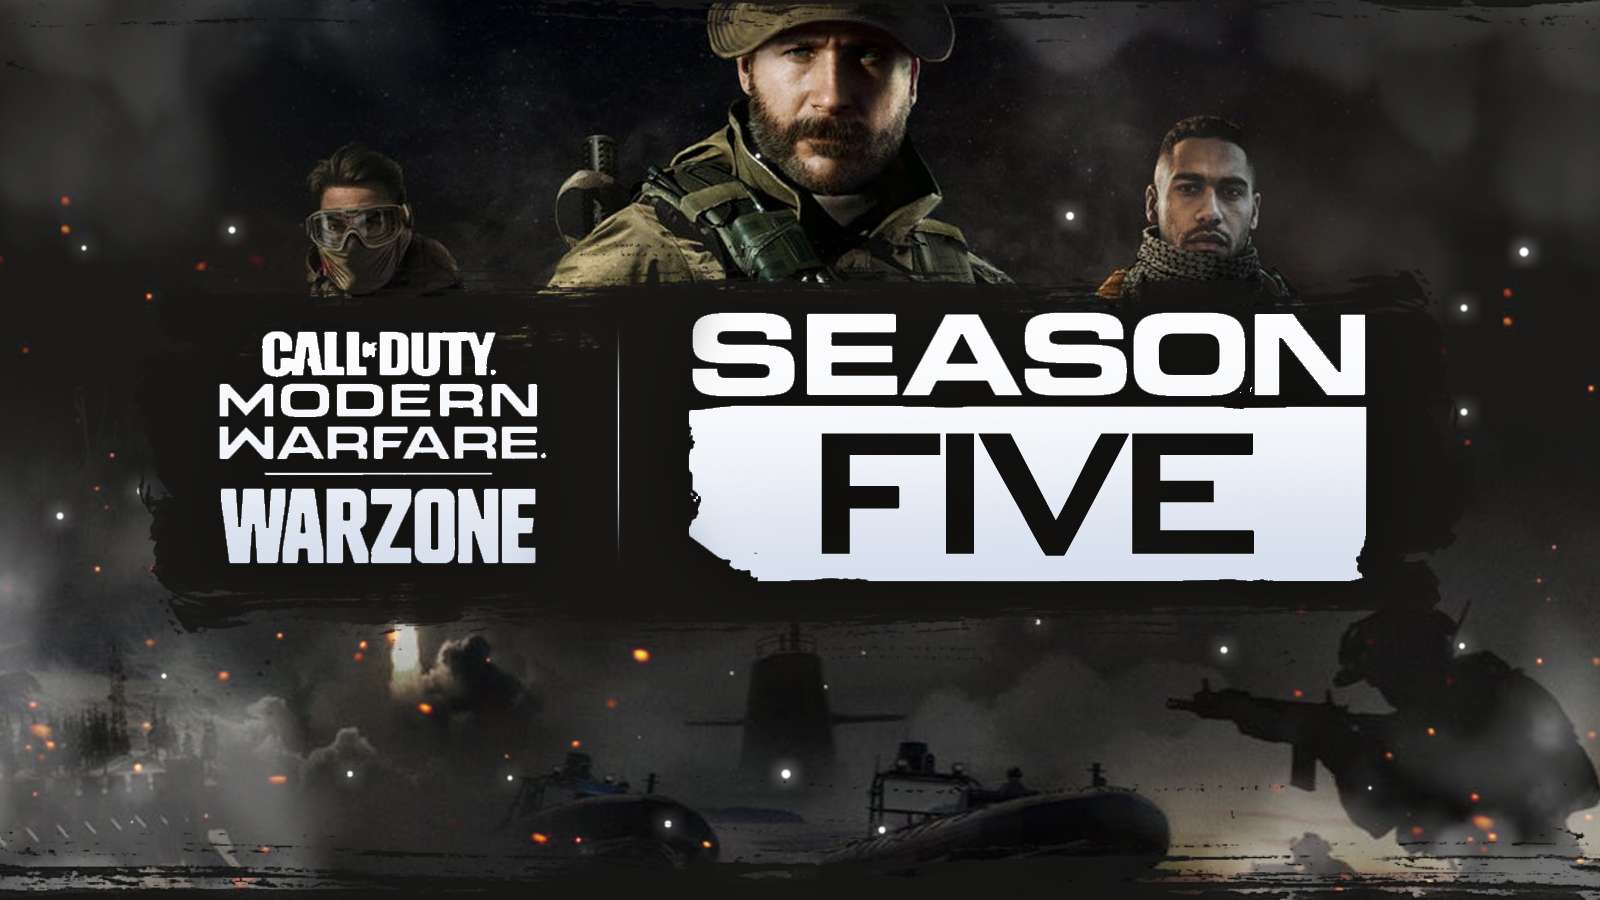 Warzone characters with Season 5 logo